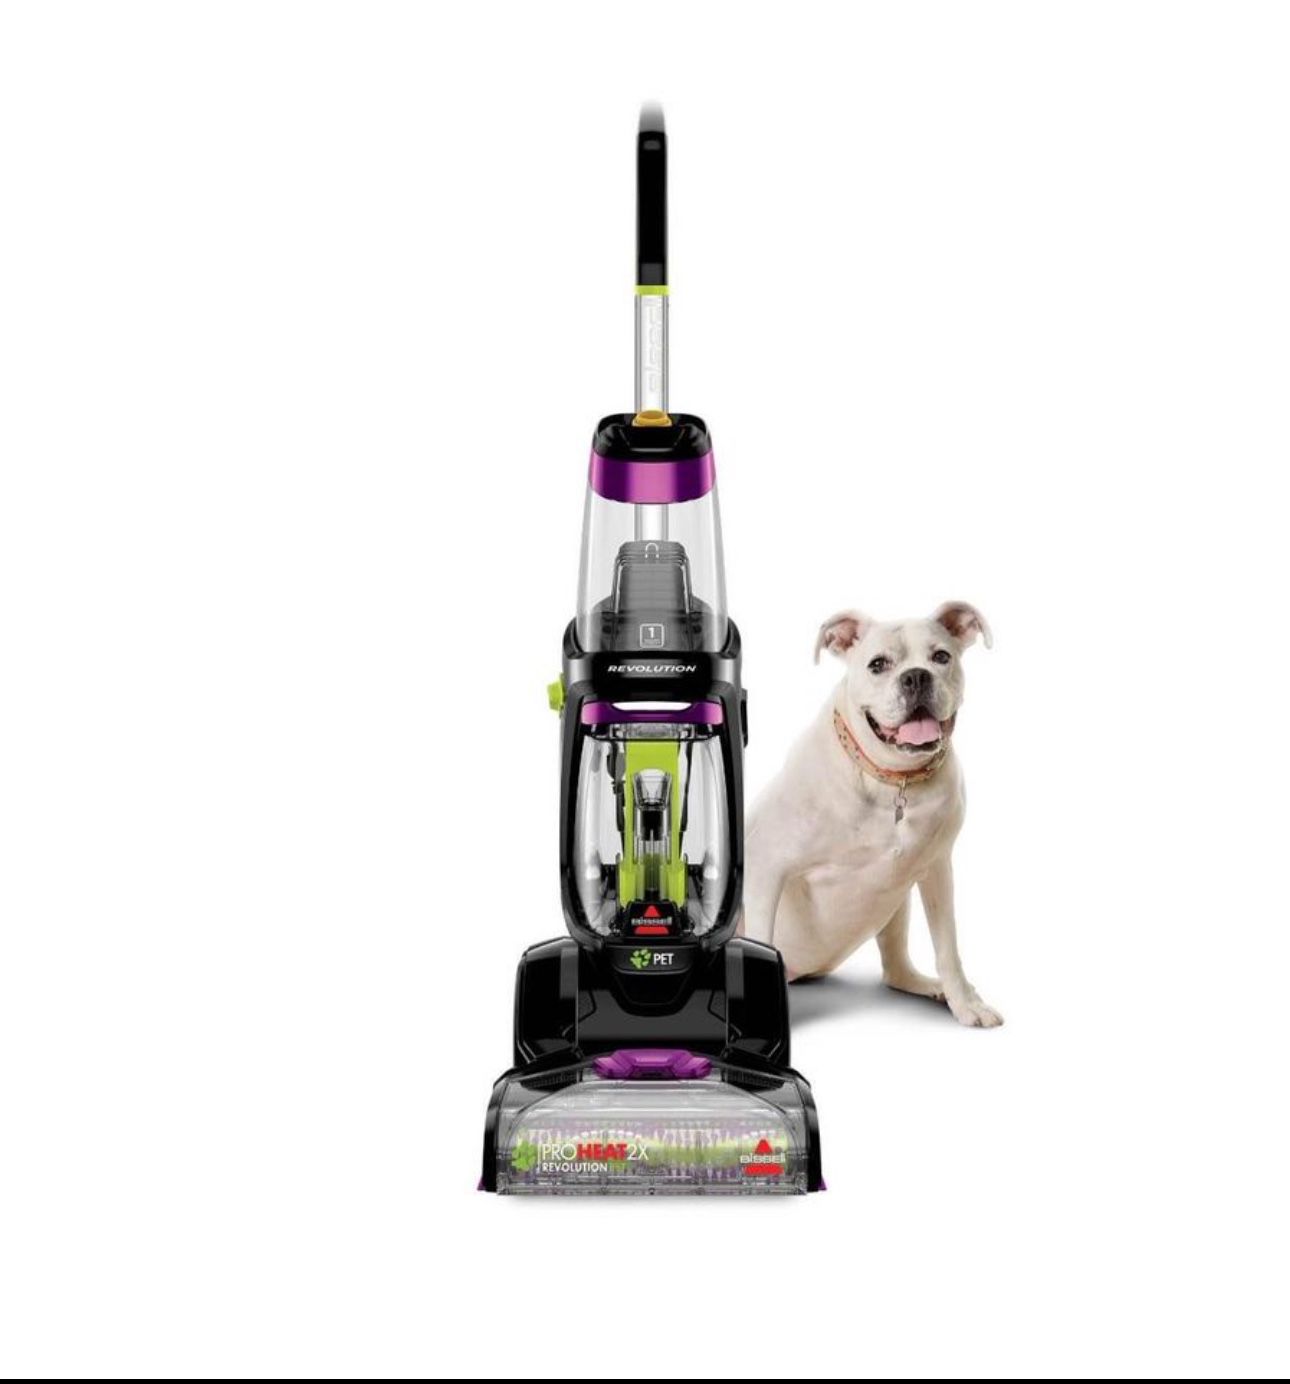 BISSELL ProHeat 2X Revolution Pet Carpet Cleaner 1551W